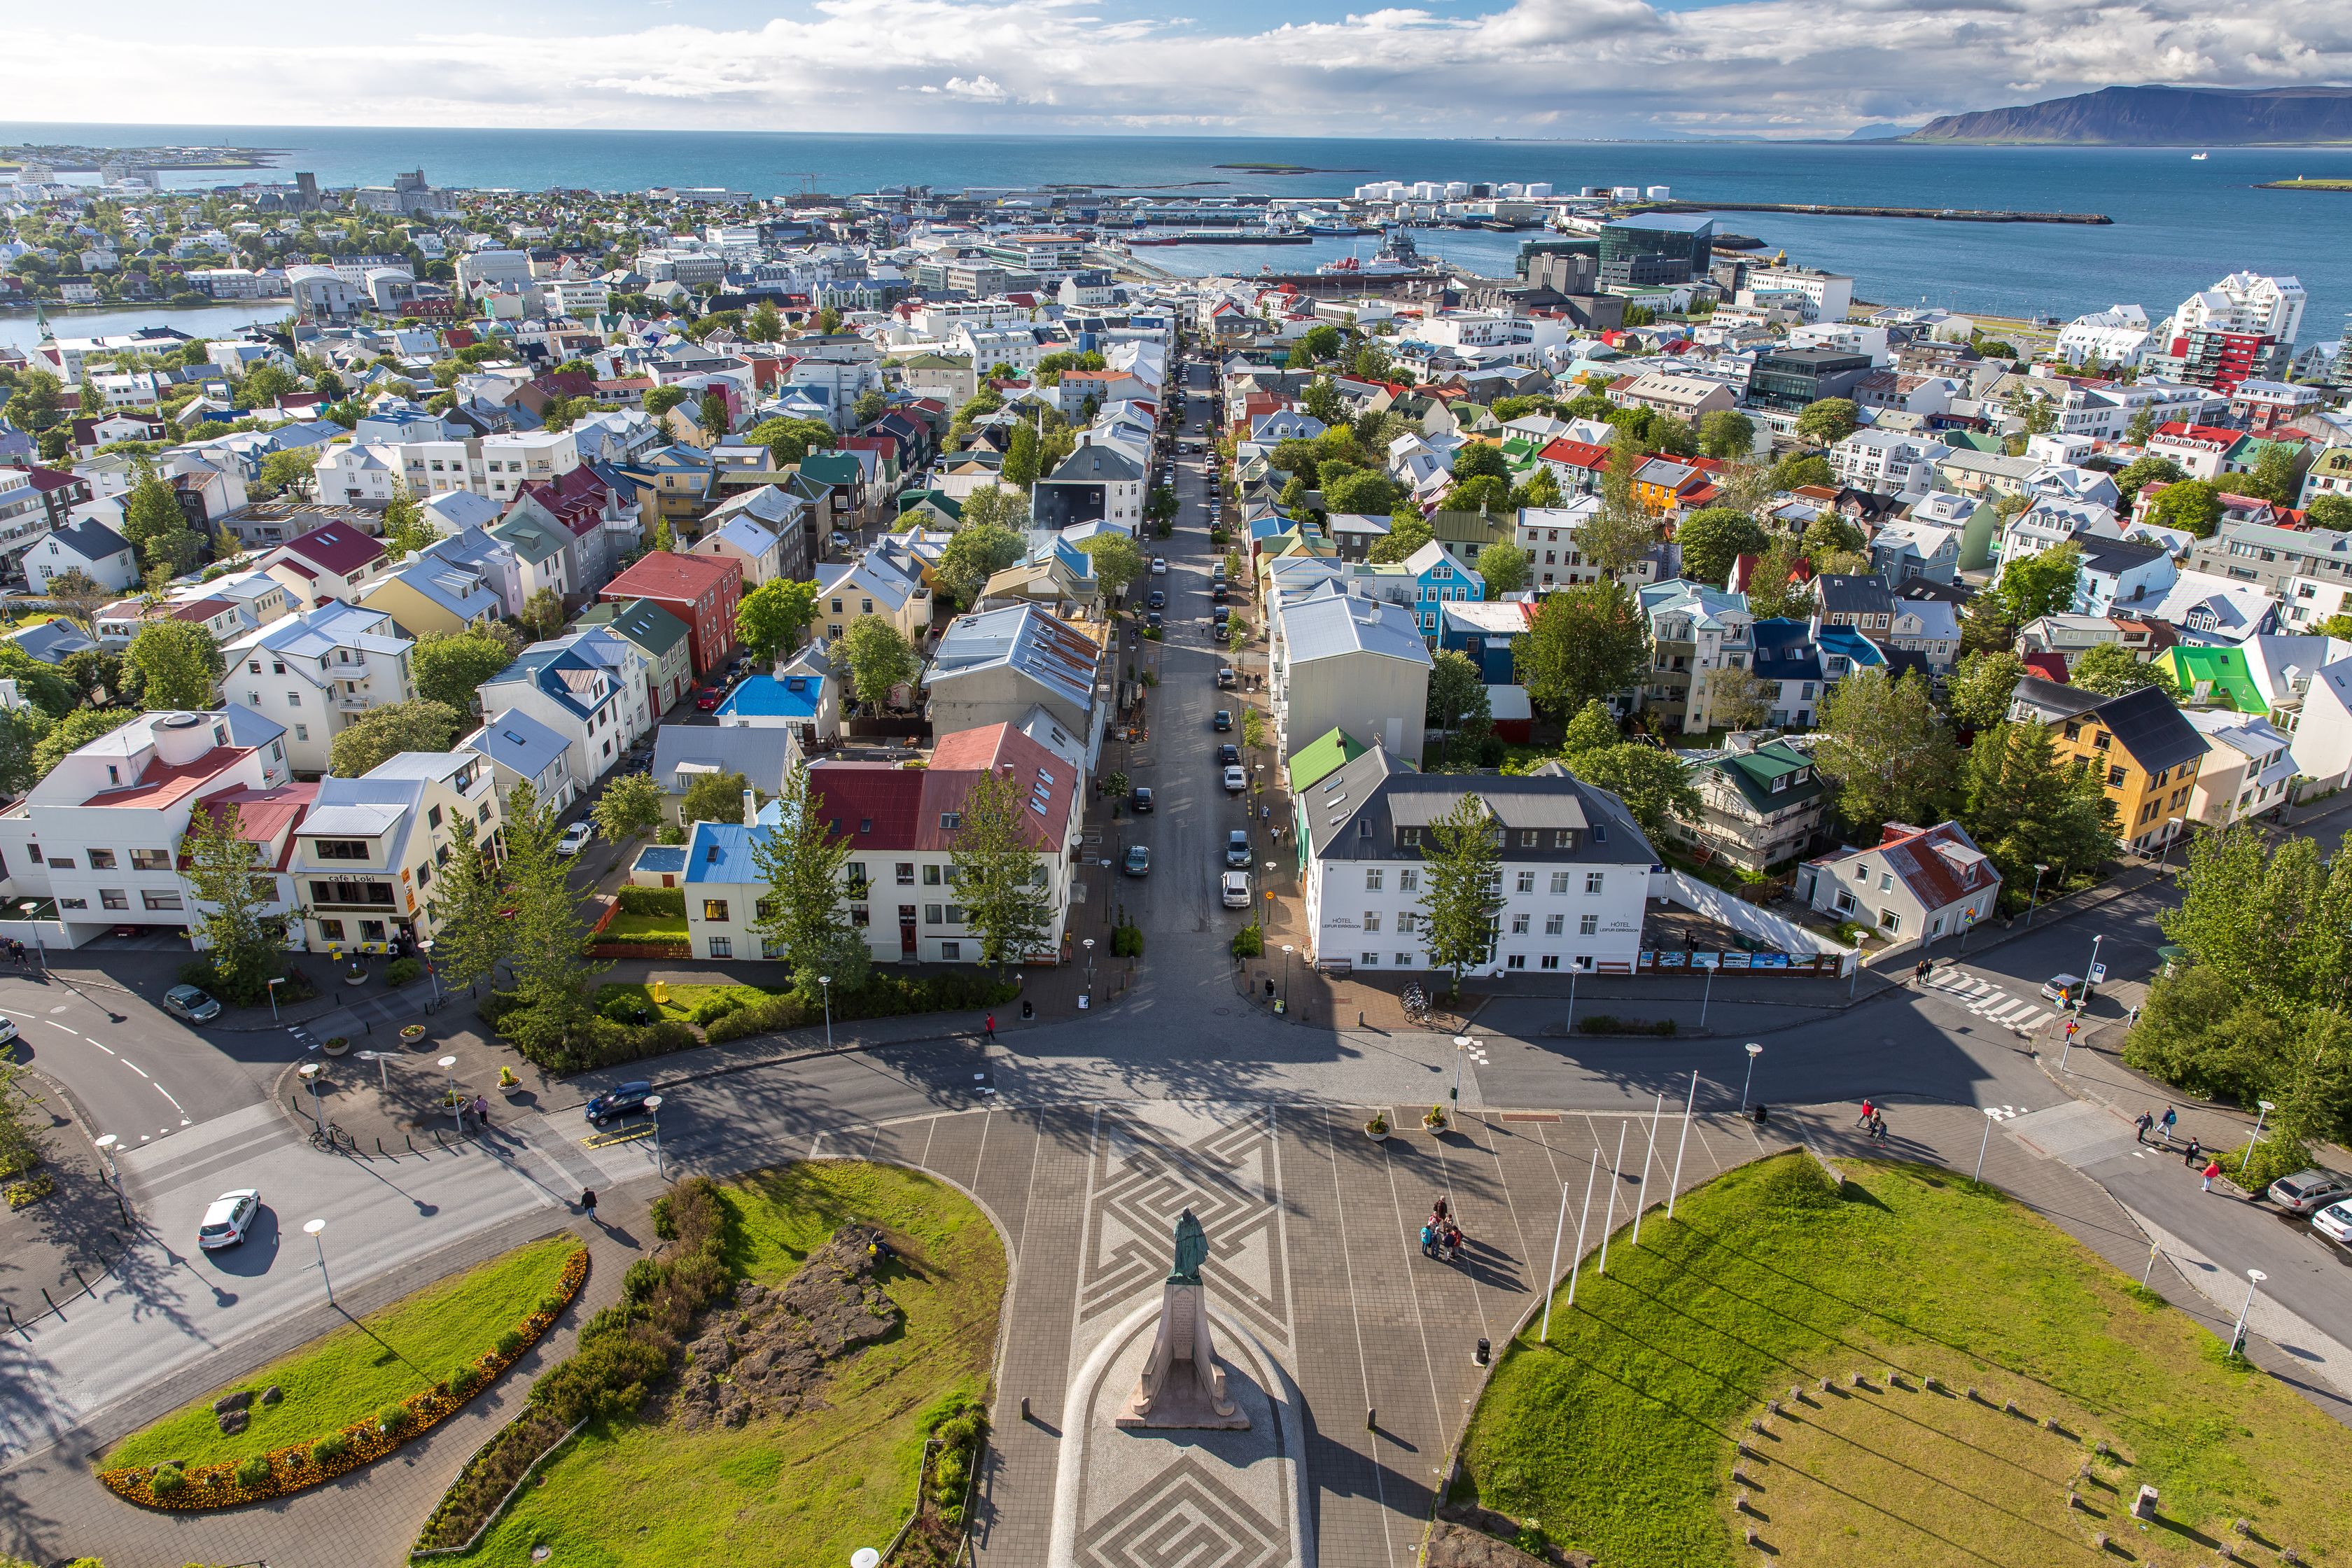 restaurants not to be missed in Reykjavik